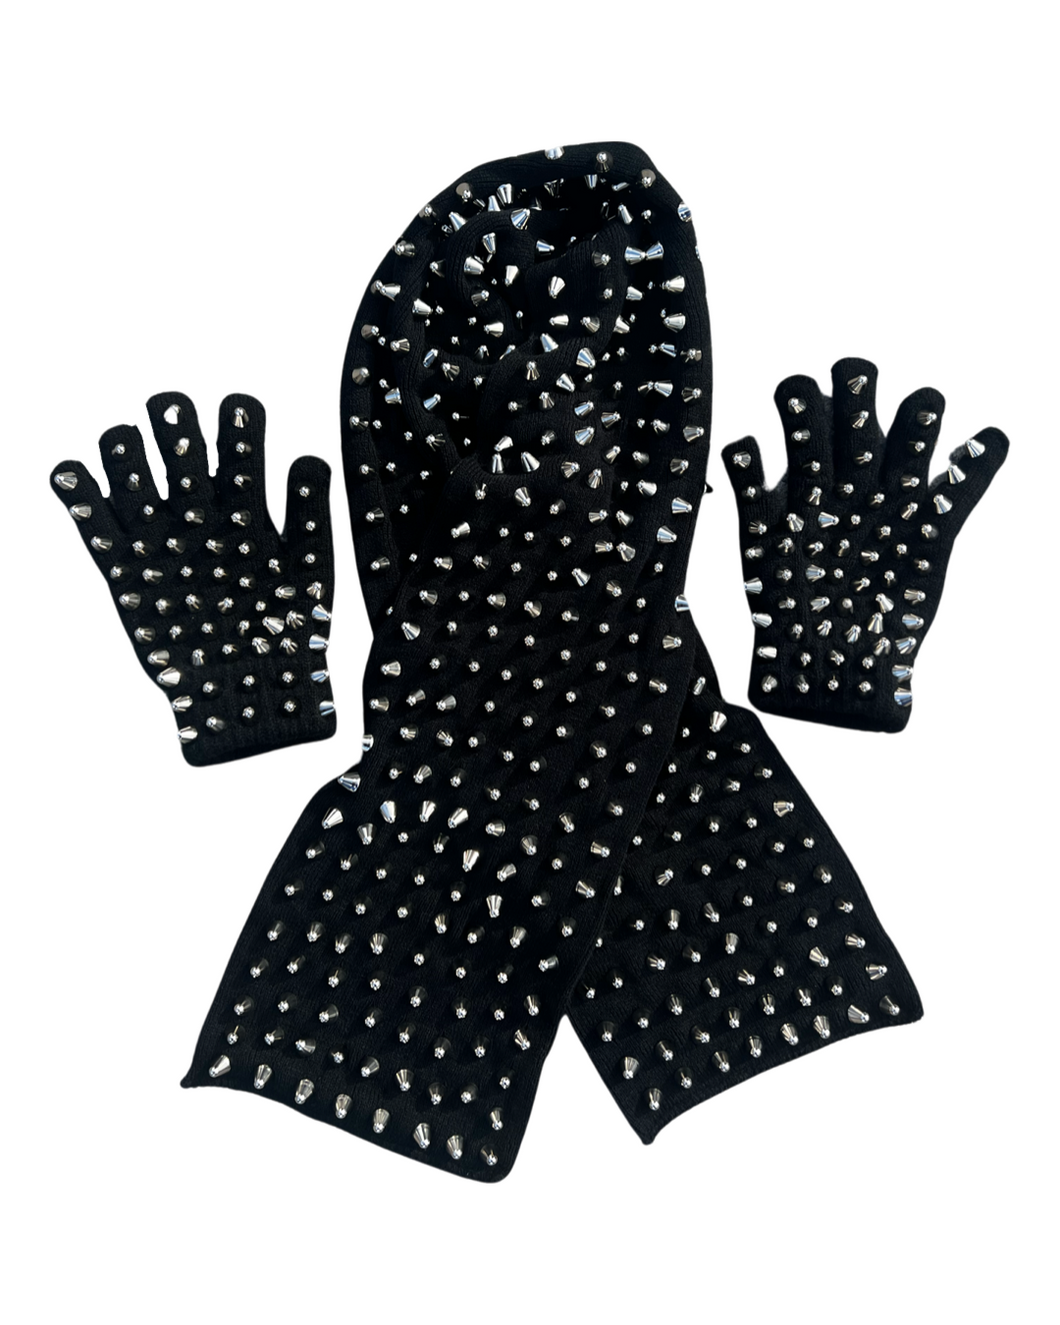 Studmuffin NYC Spike Glove & Scarf Set